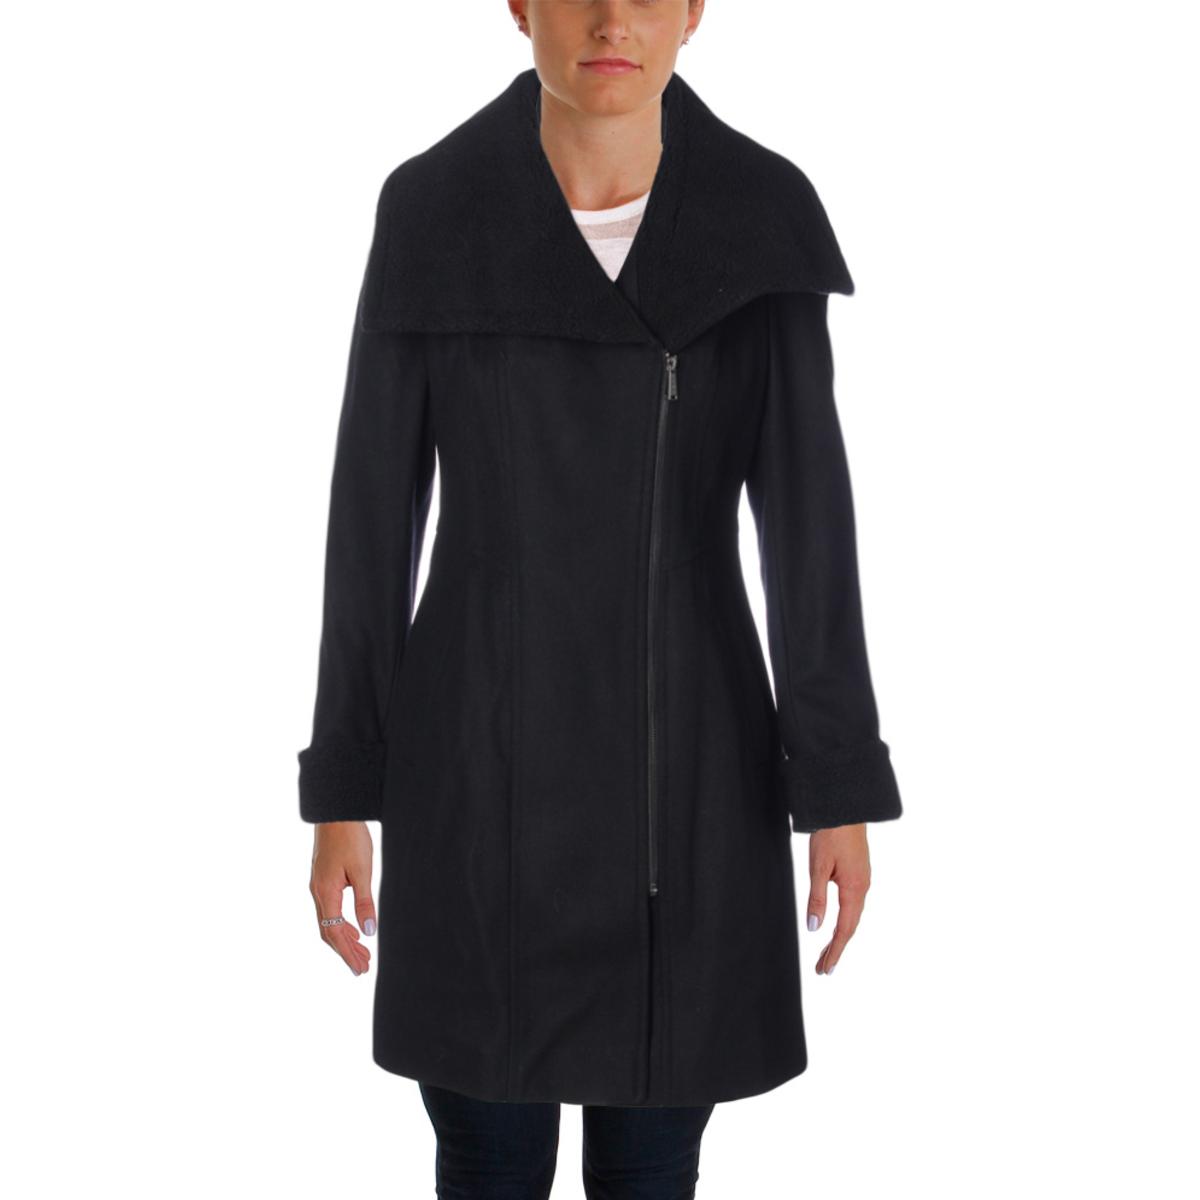 DKNY Womens Wool Blend Shearling Coat | eBay